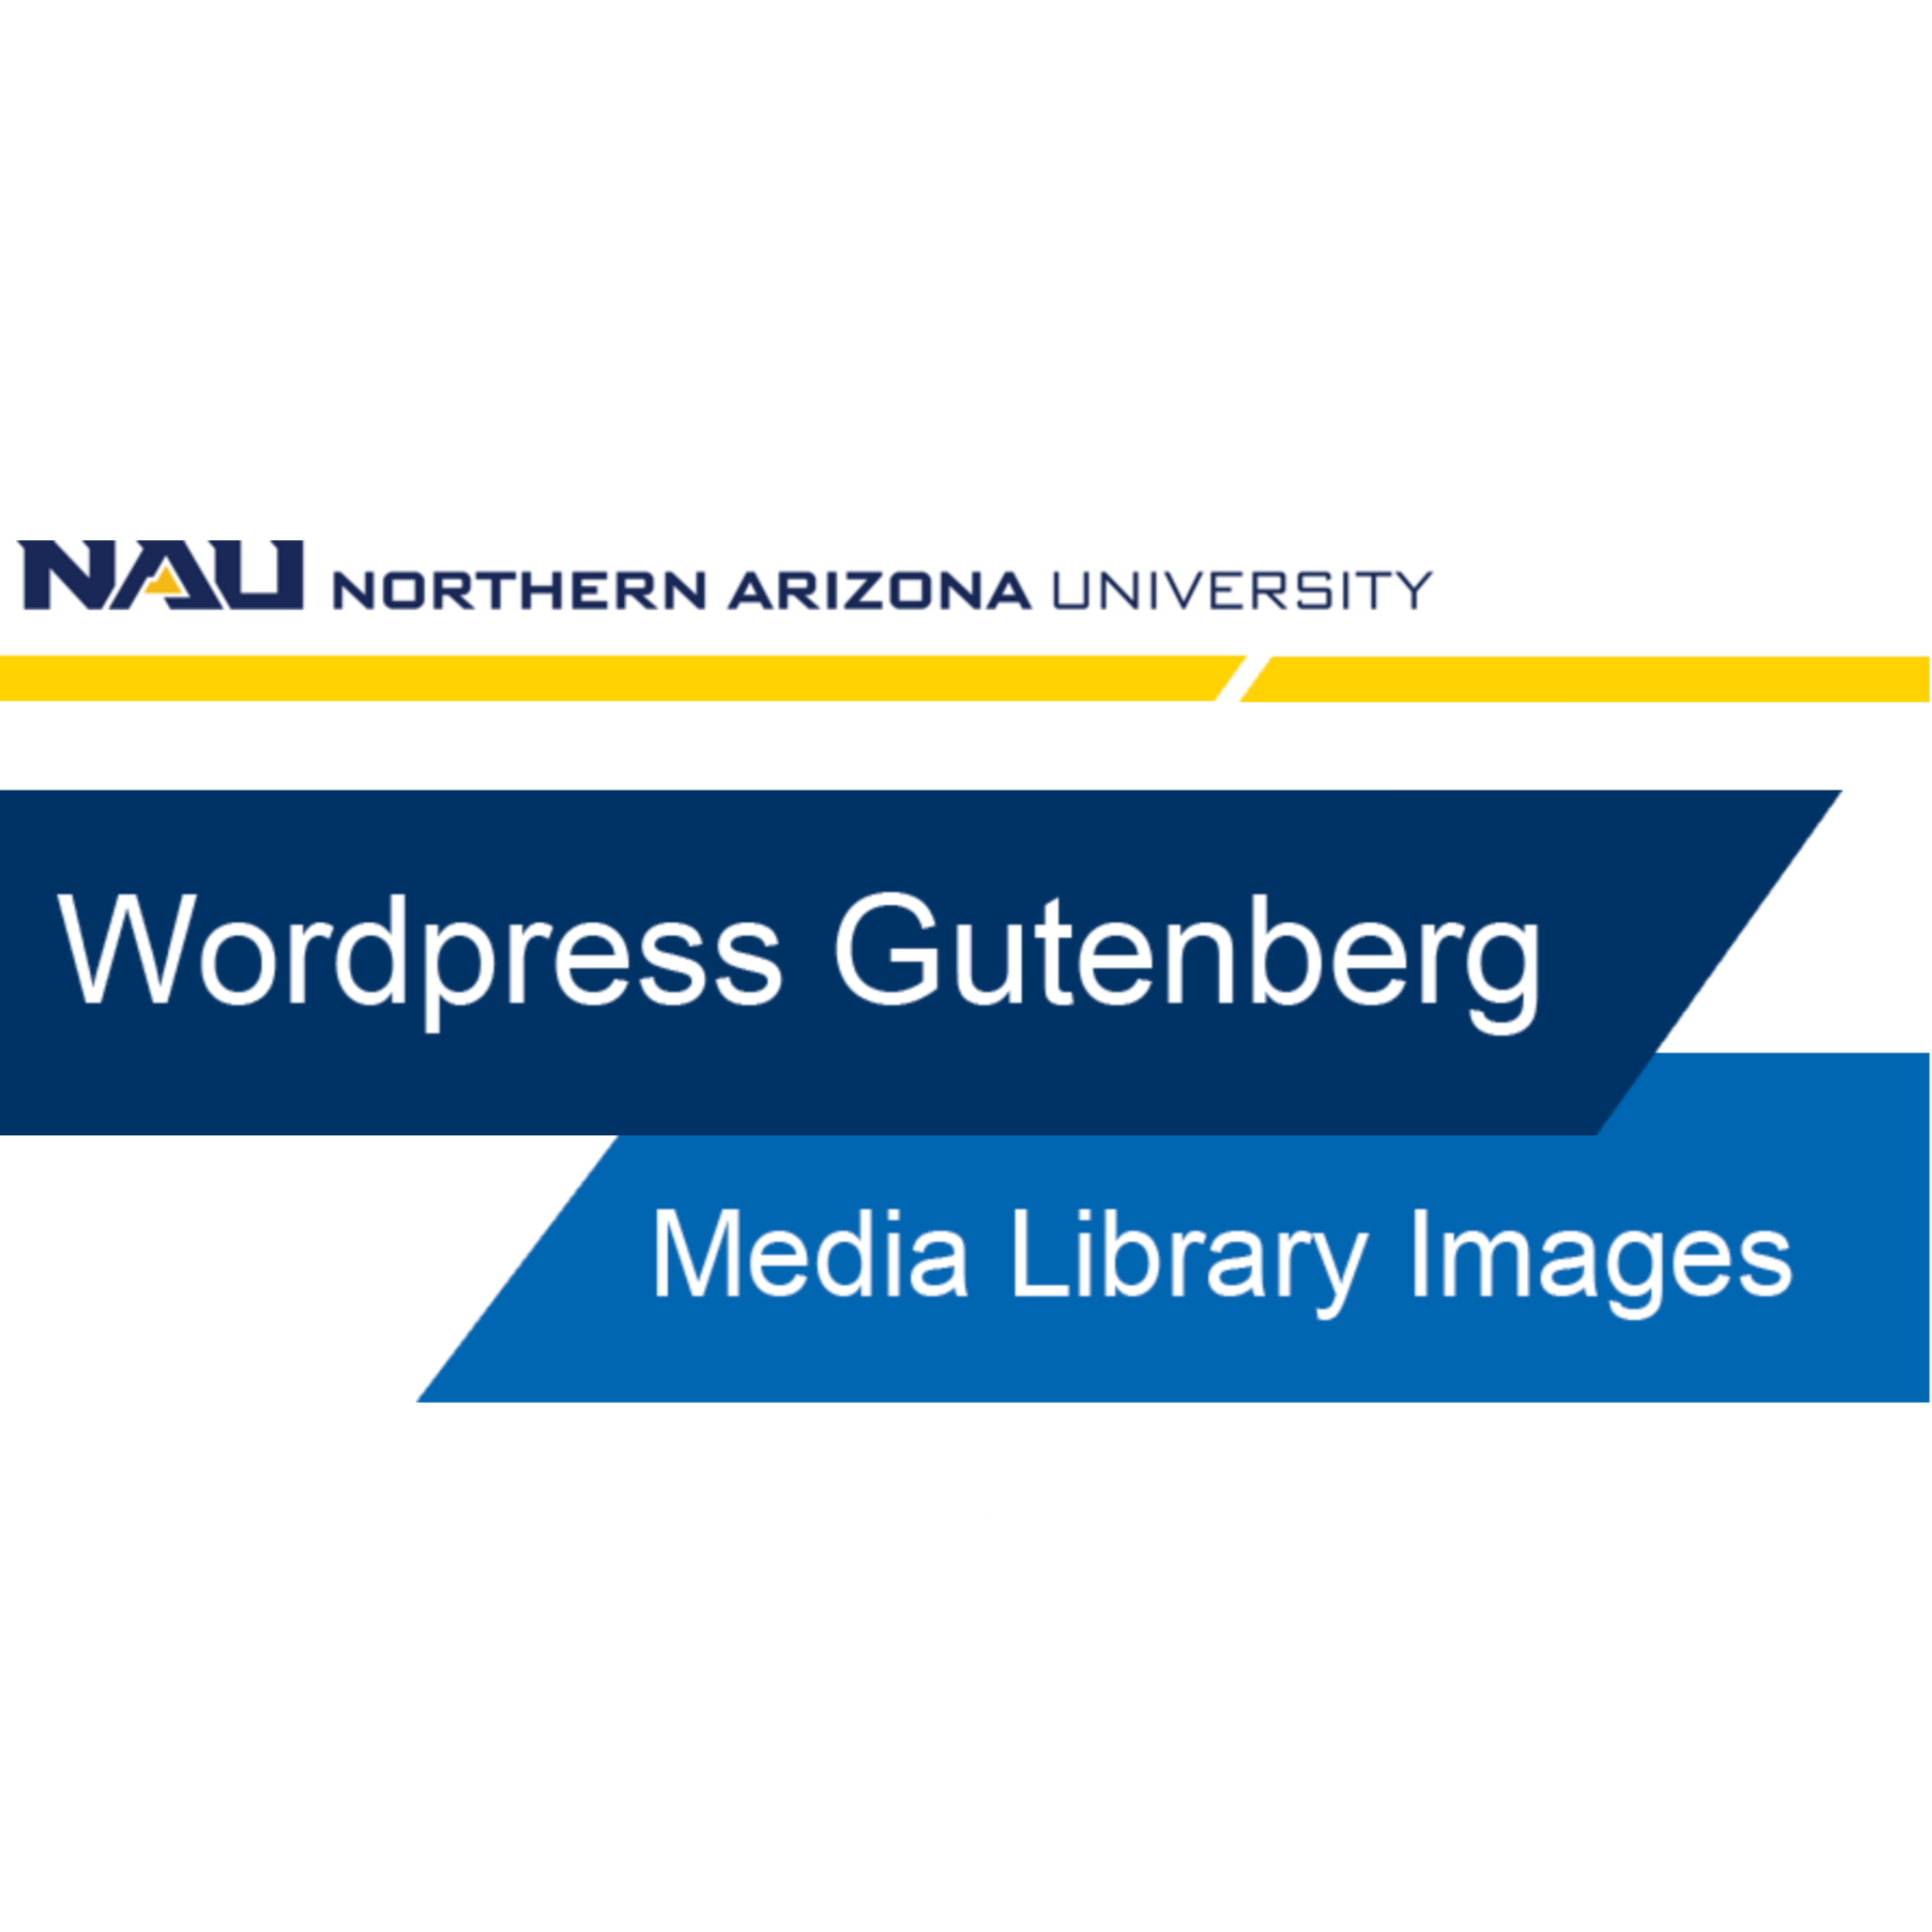 Thumbnail image of the Northern Arizona University WordPress Gutenberg tutorial start page, titled 'Media Library Images'.